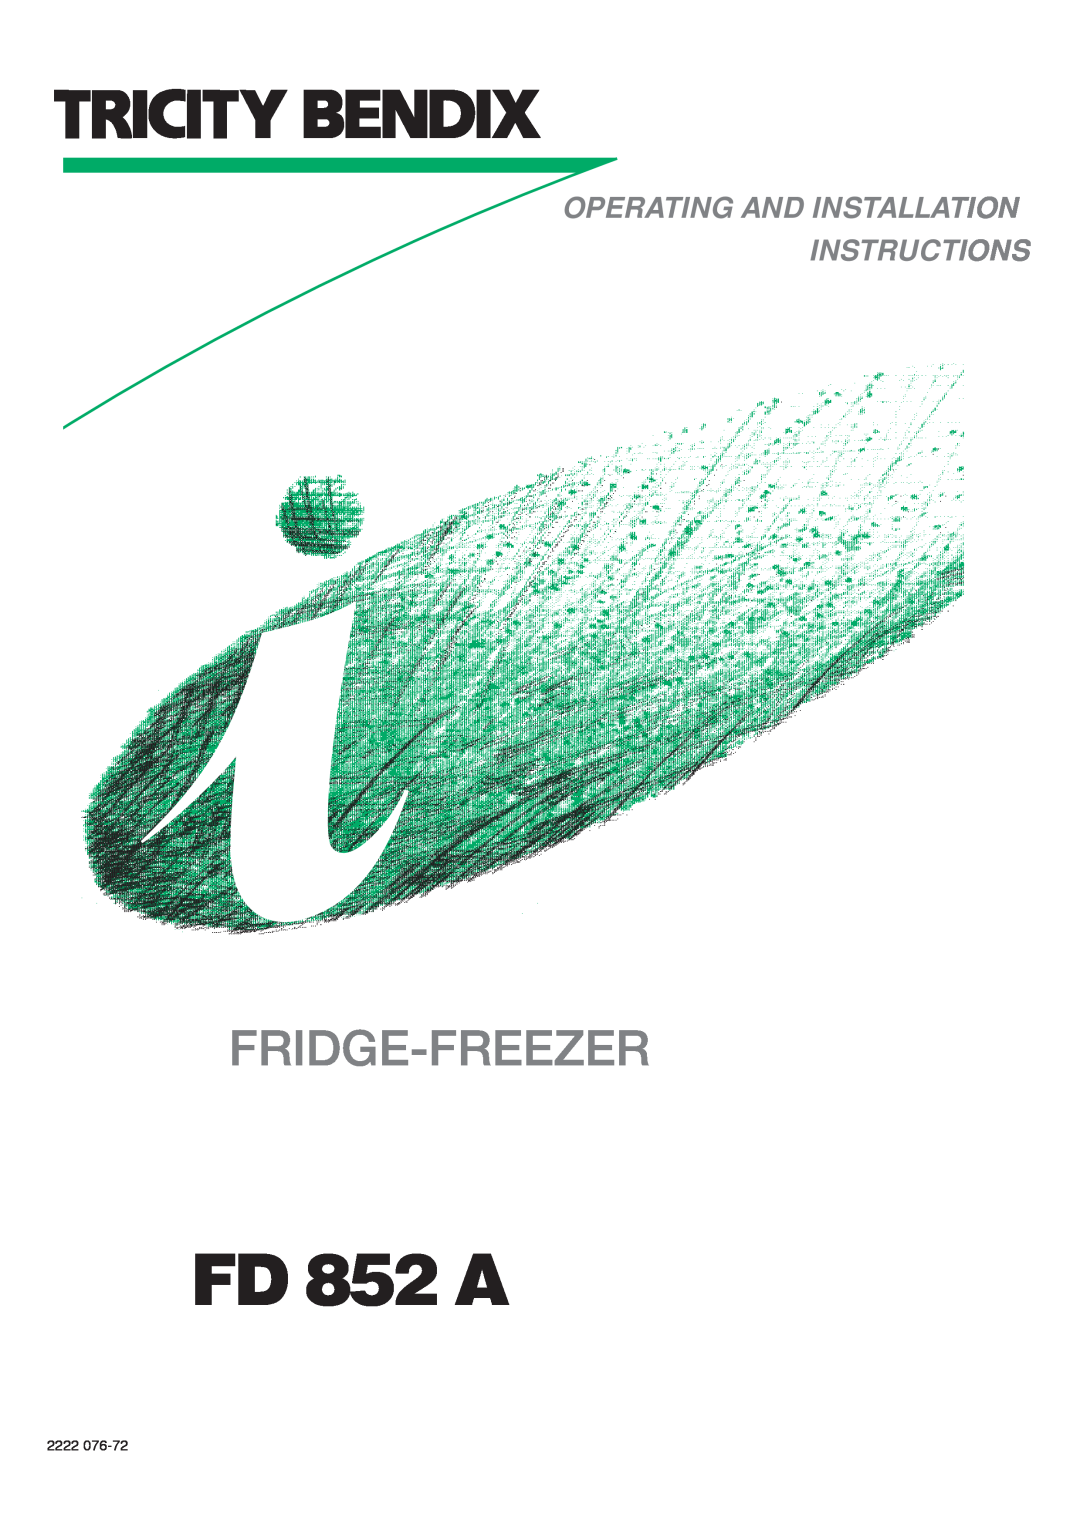 Tricity Bendix FD 852 A installation instructions Fridge-Freezer, Operating And Installation Instructions, 2222 